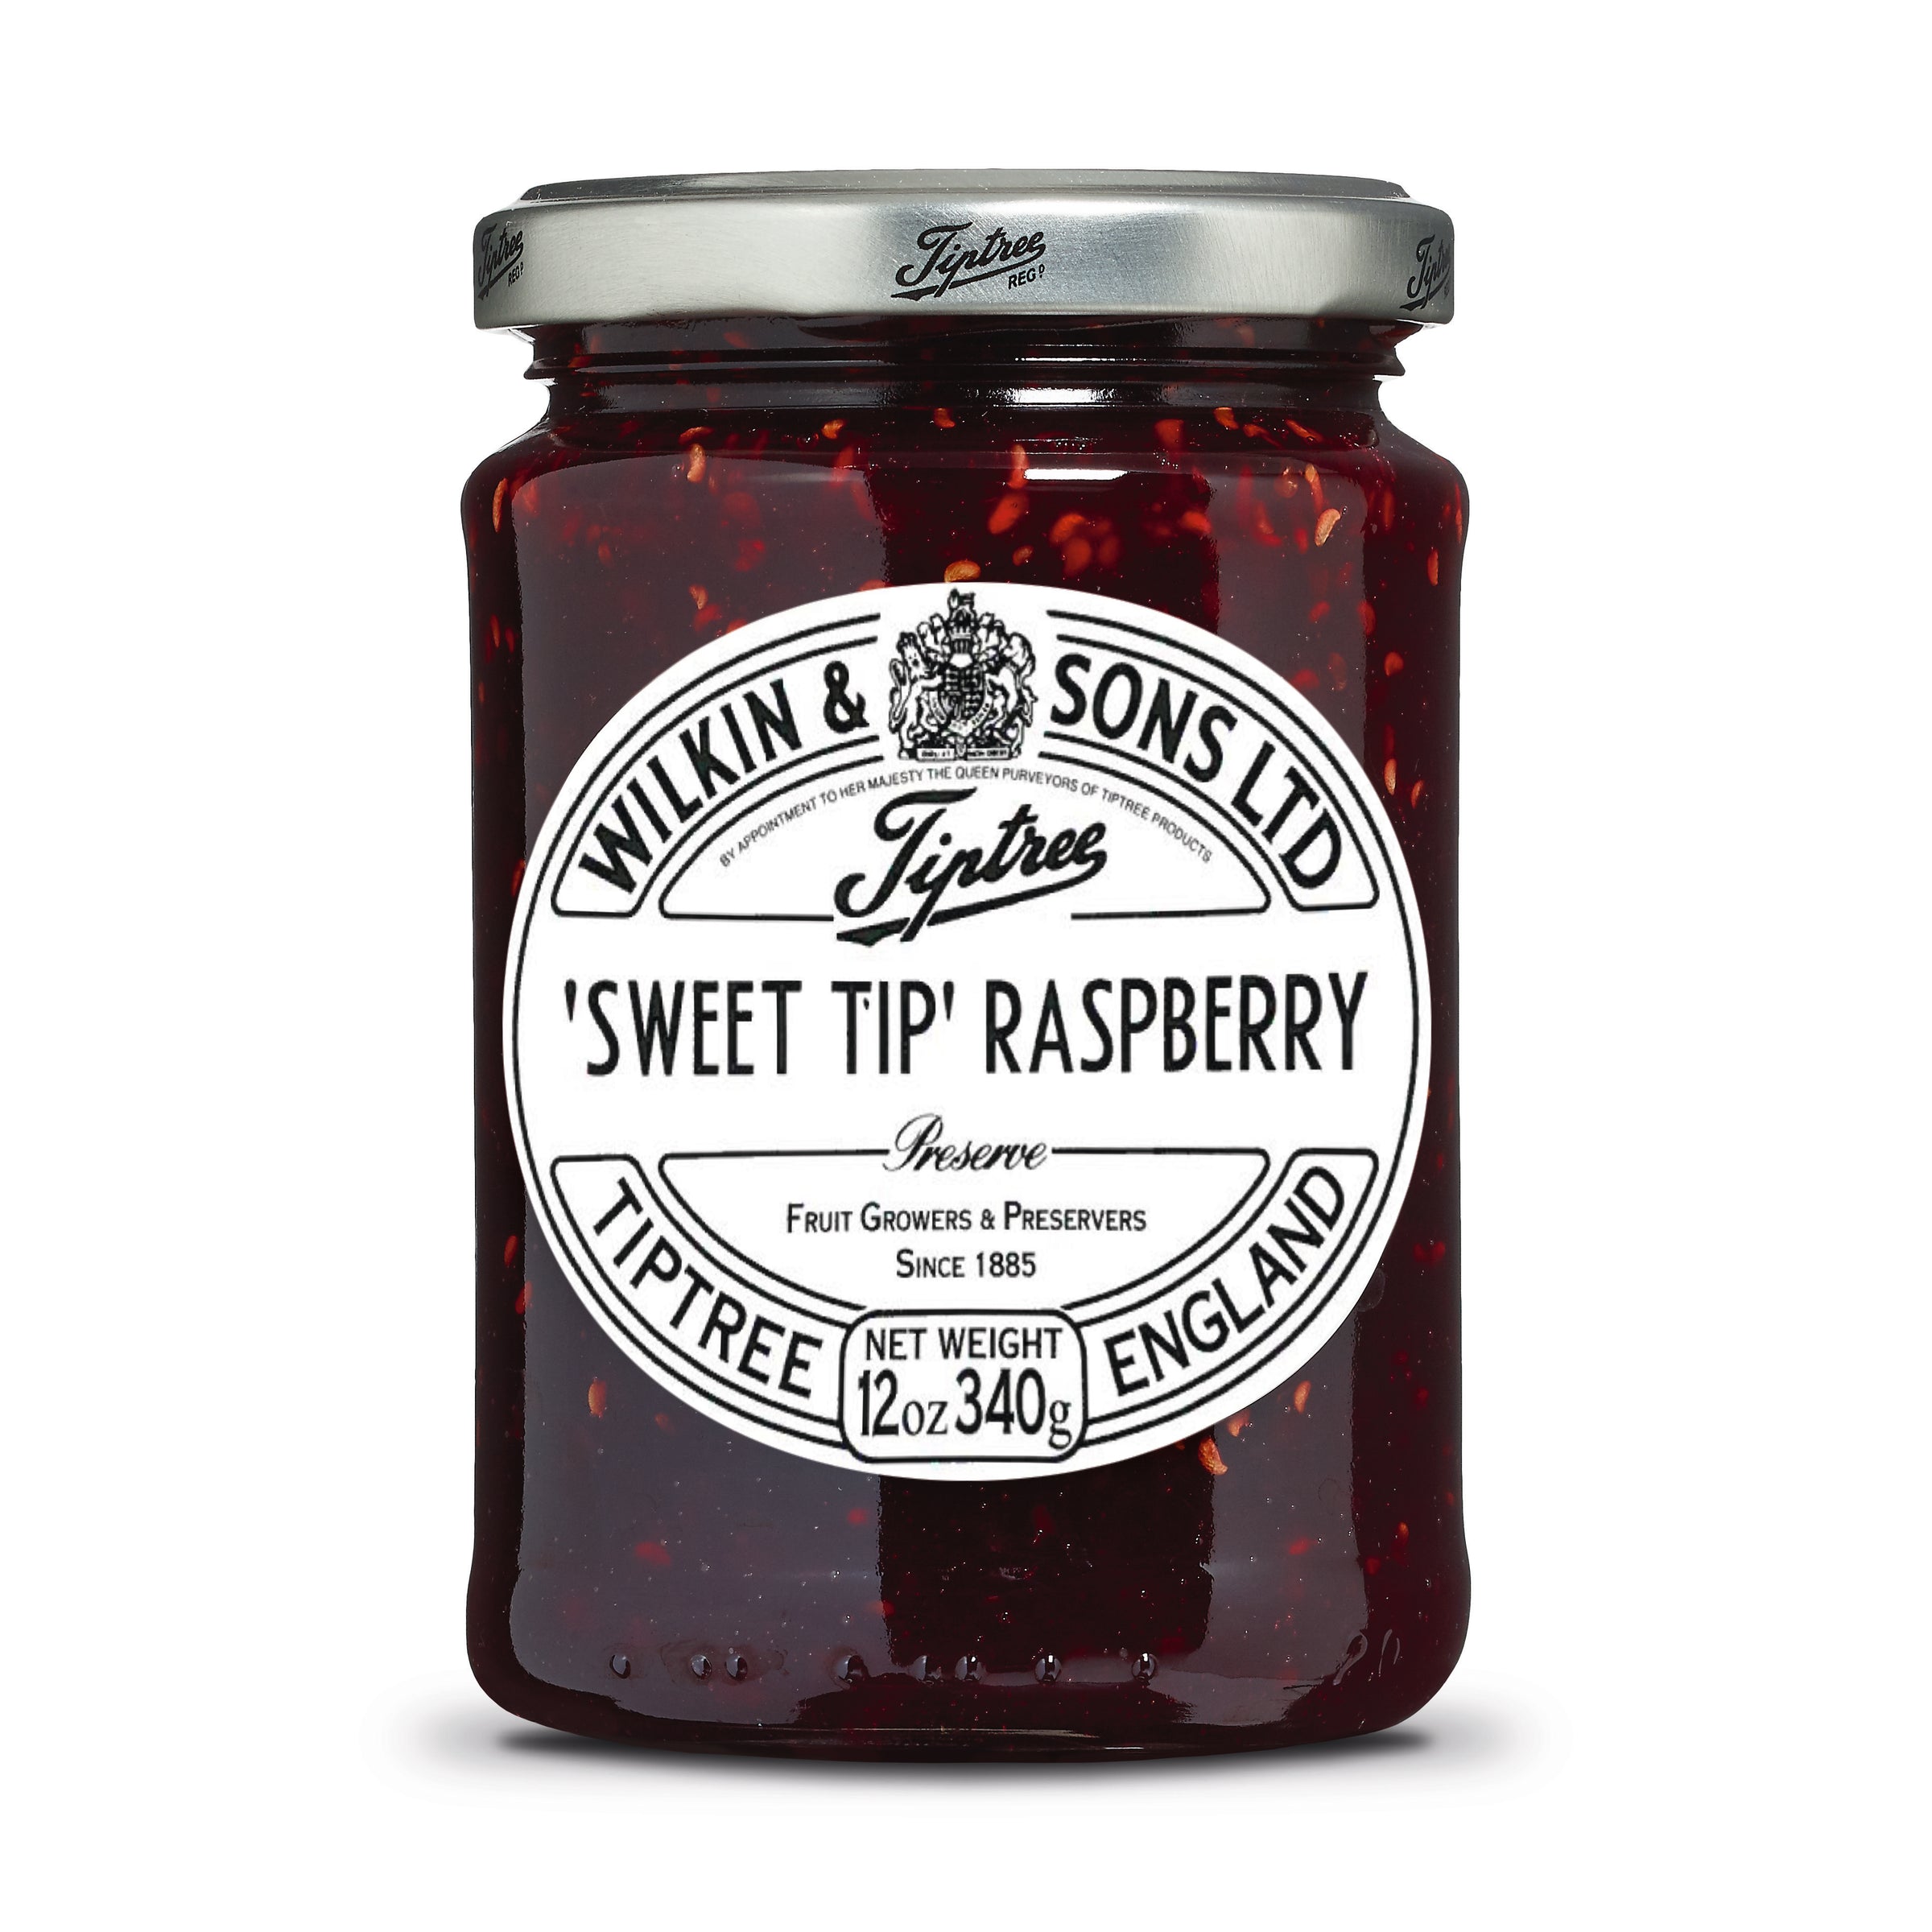 Sweet Tip Raspberry Preserve